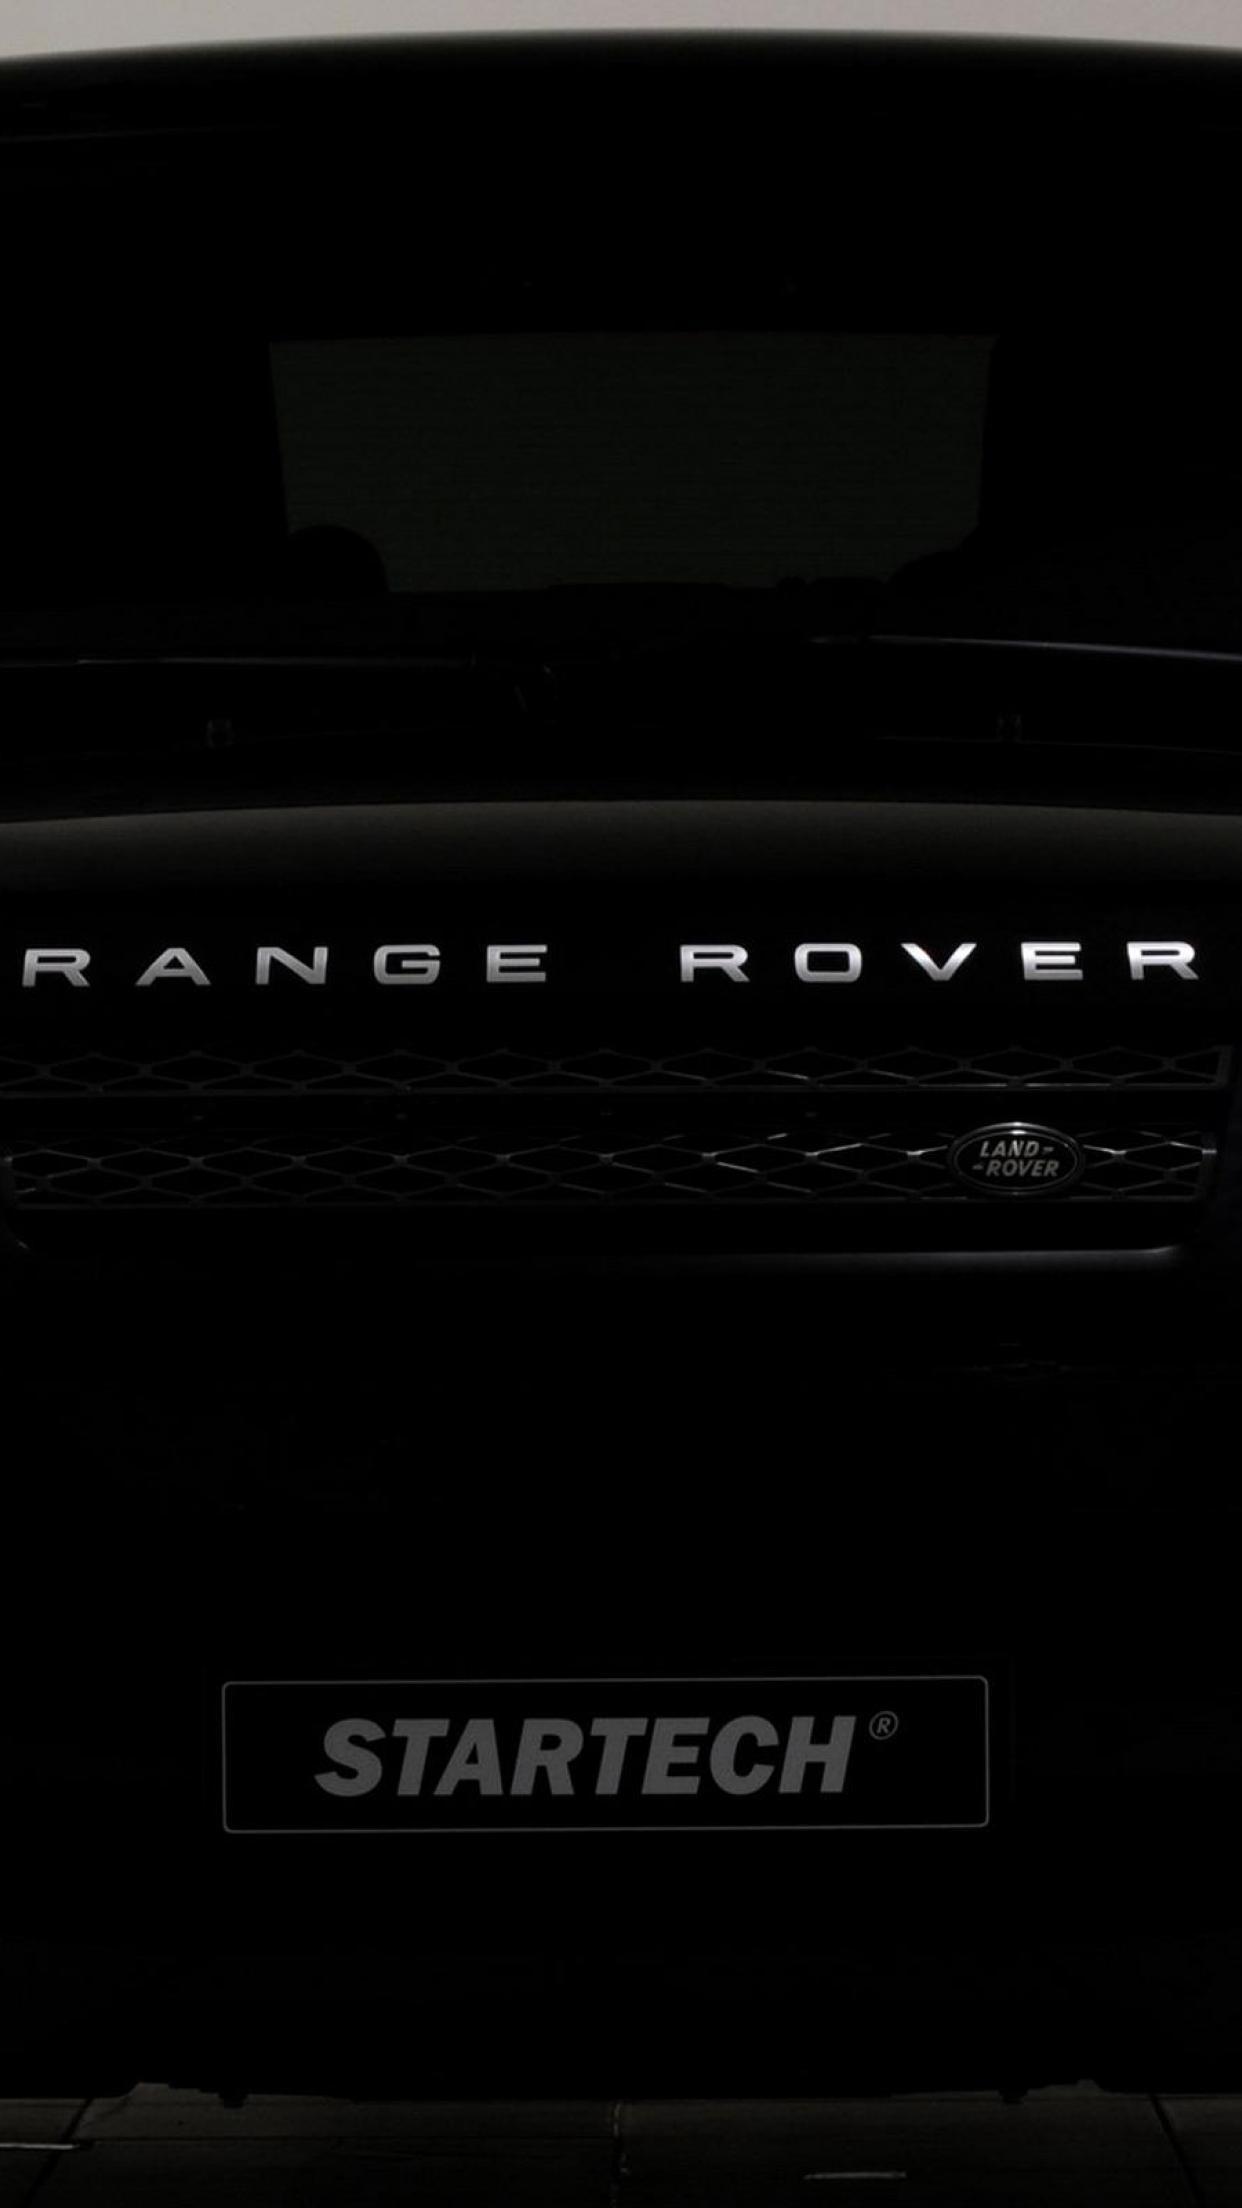 Startech land rover range rover Rover Range Cars Land STARTECH HD